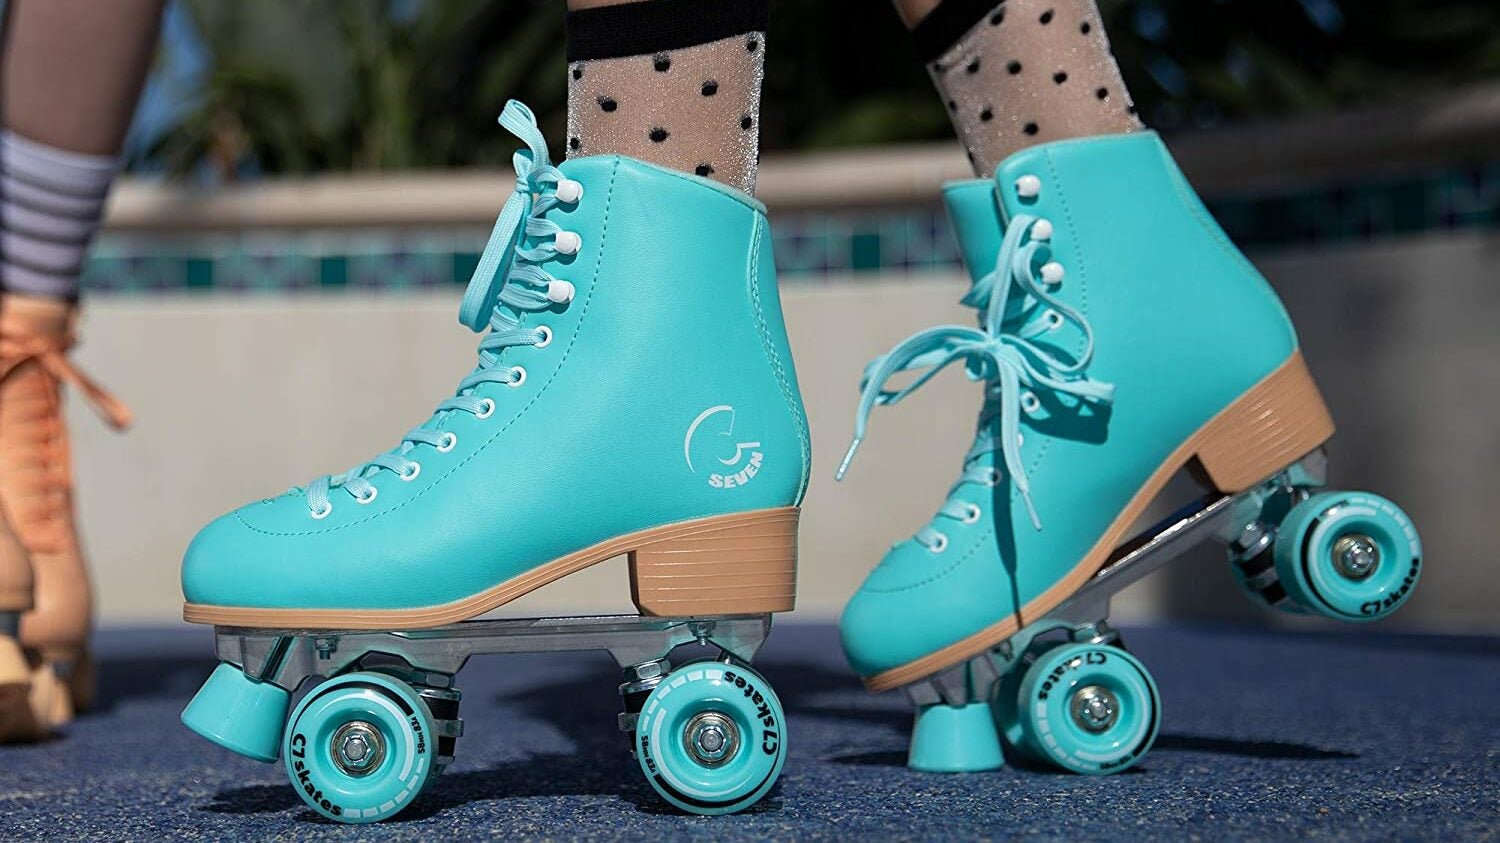 GVDV Roller Skates for Women/Girls Shiny PU Leather High-top Roller Skate Shoes for Beginner Purpe 4 Wheels Quad Skates for Outdoor Indoor Classic Double-Row Roller Skates 